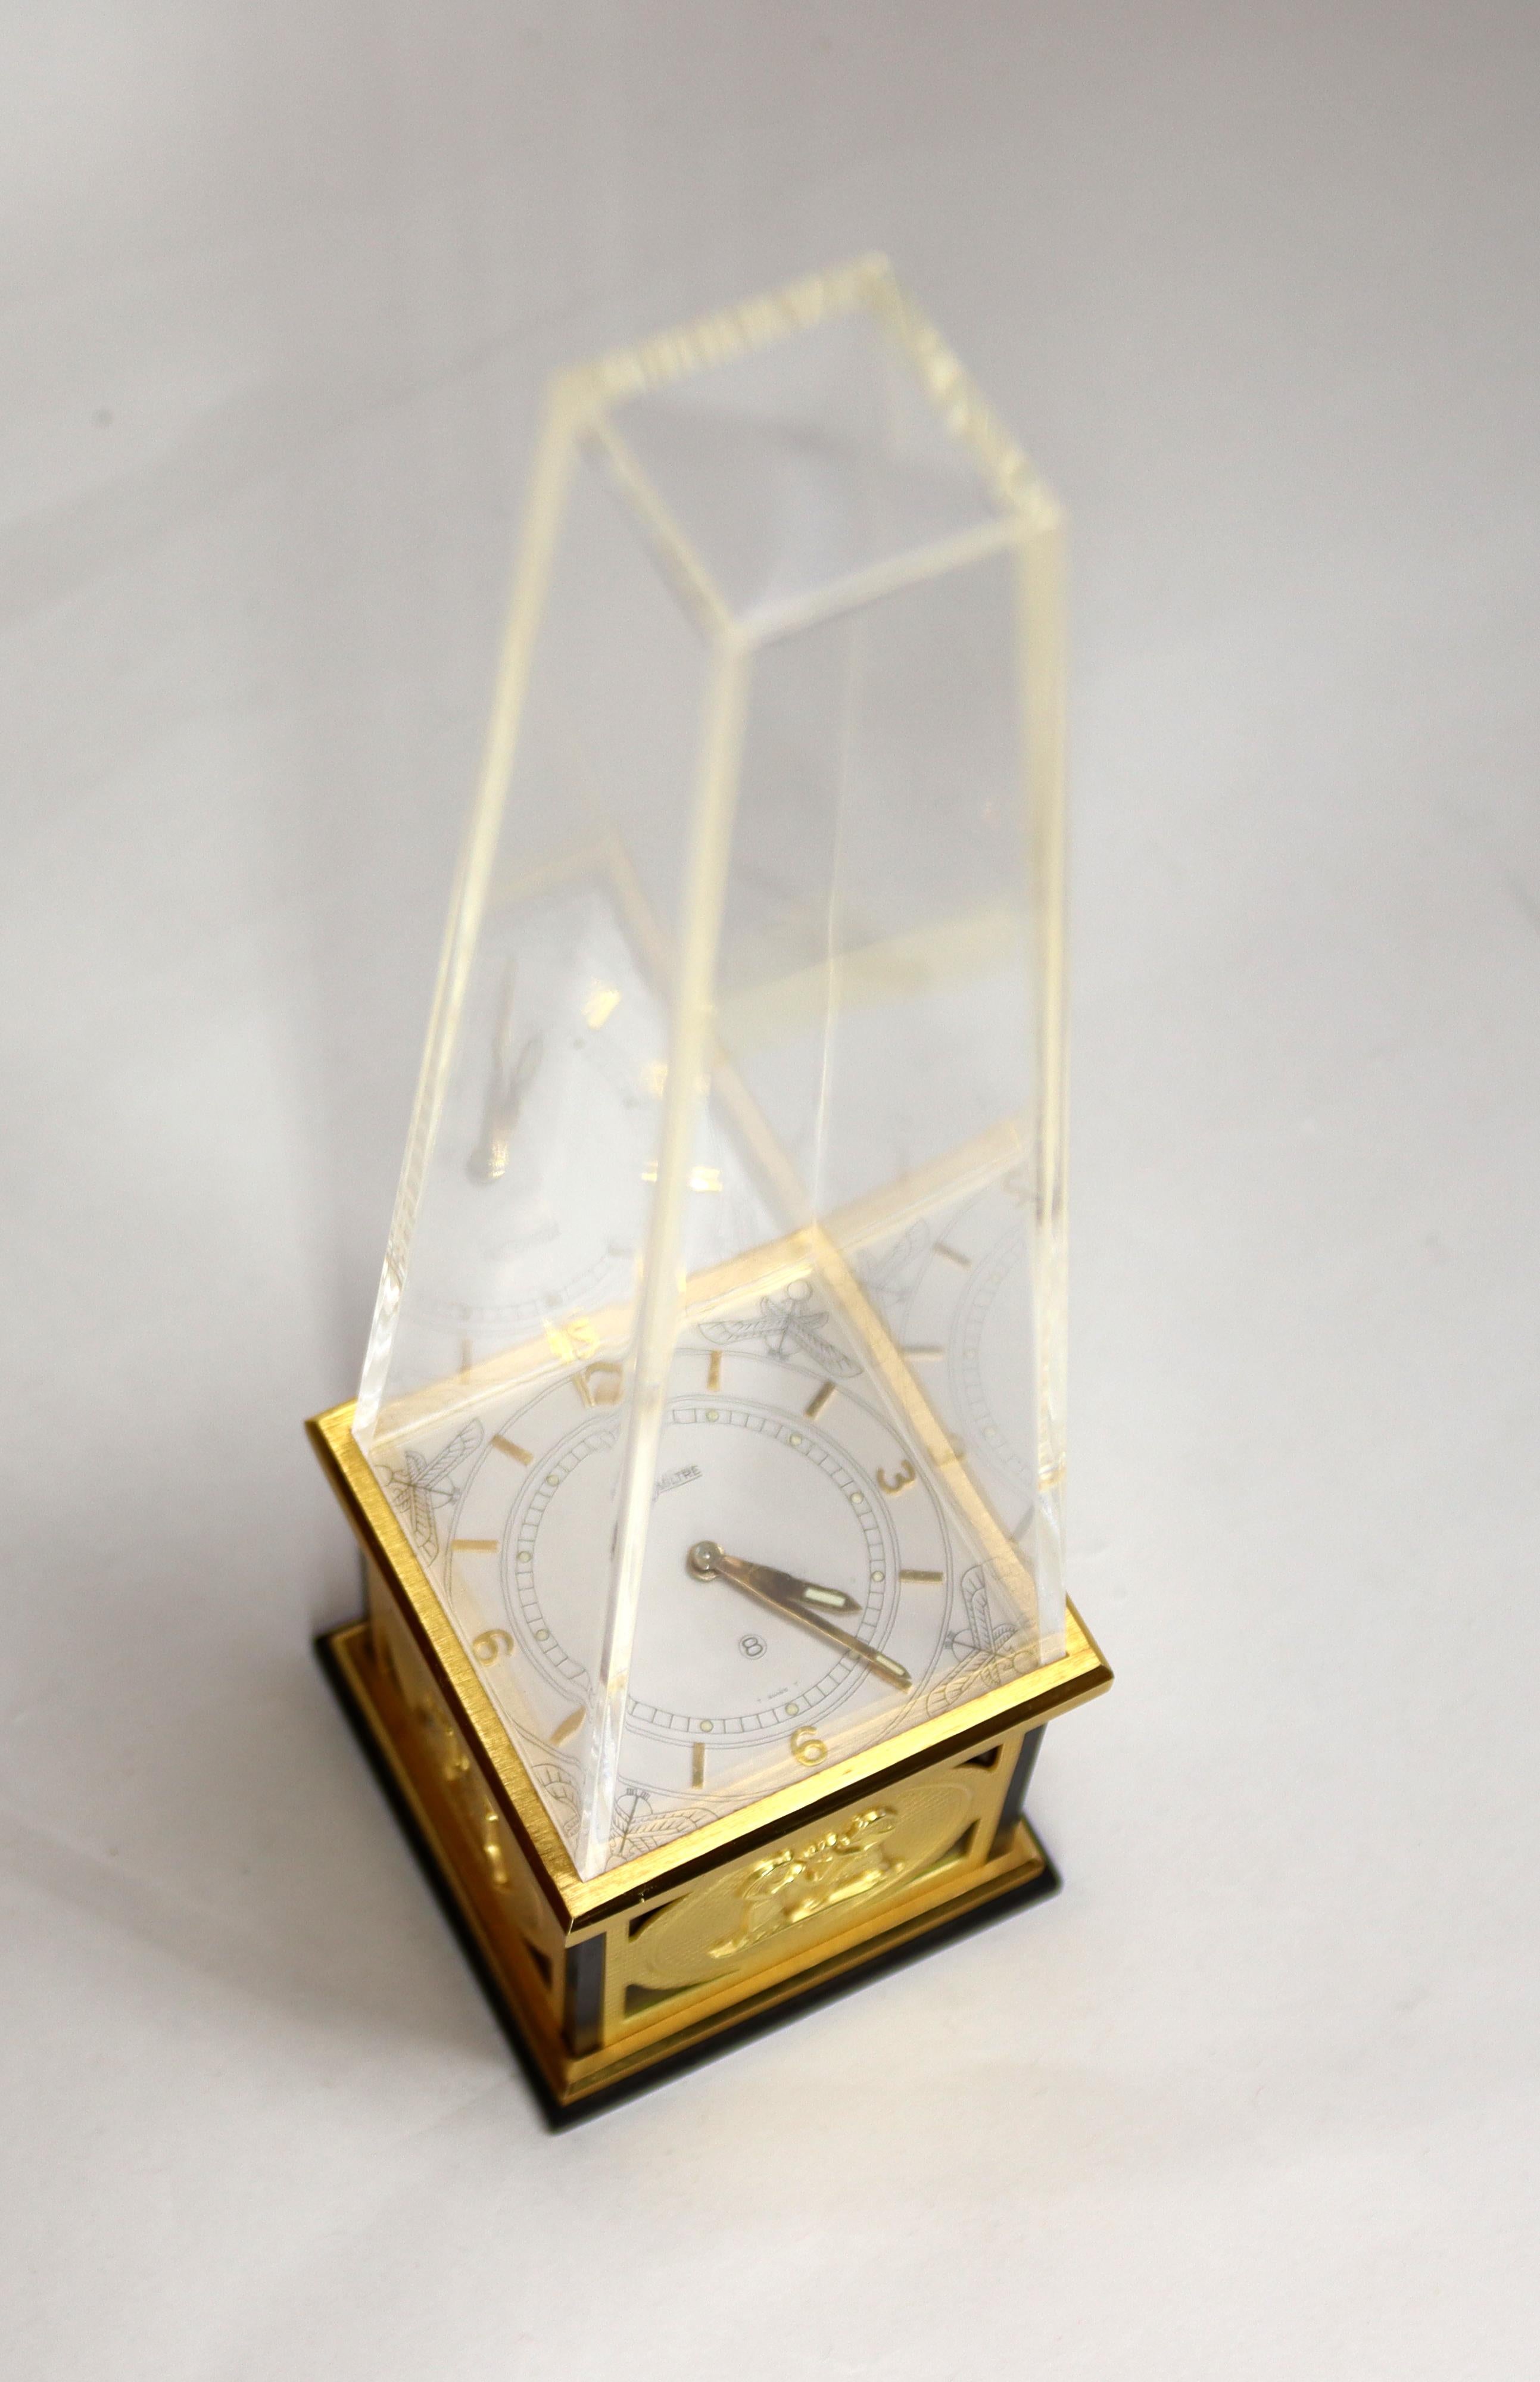 Gilt A Novelty Desk Clock By Jaeger LeCoultre For Sale